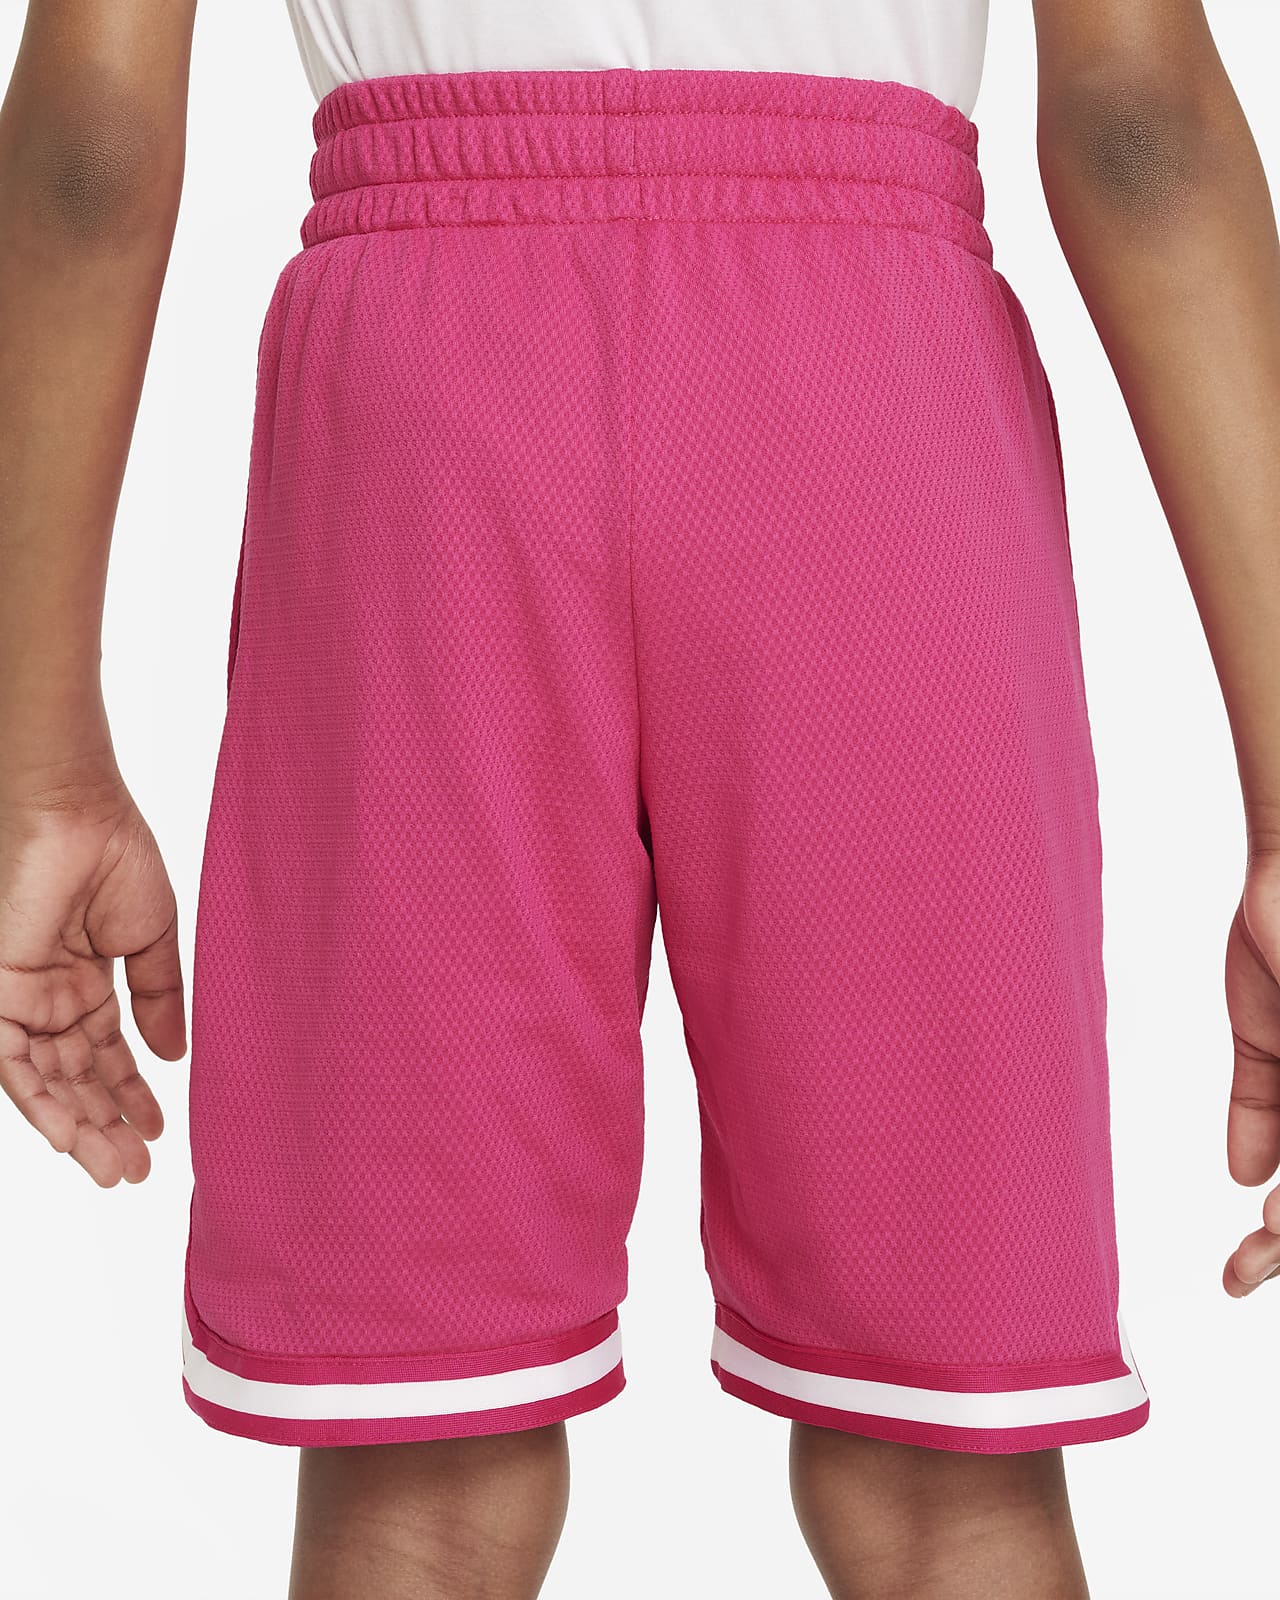 Nike Dri-FIT Big Kids' (Boys') Basketball Shorts